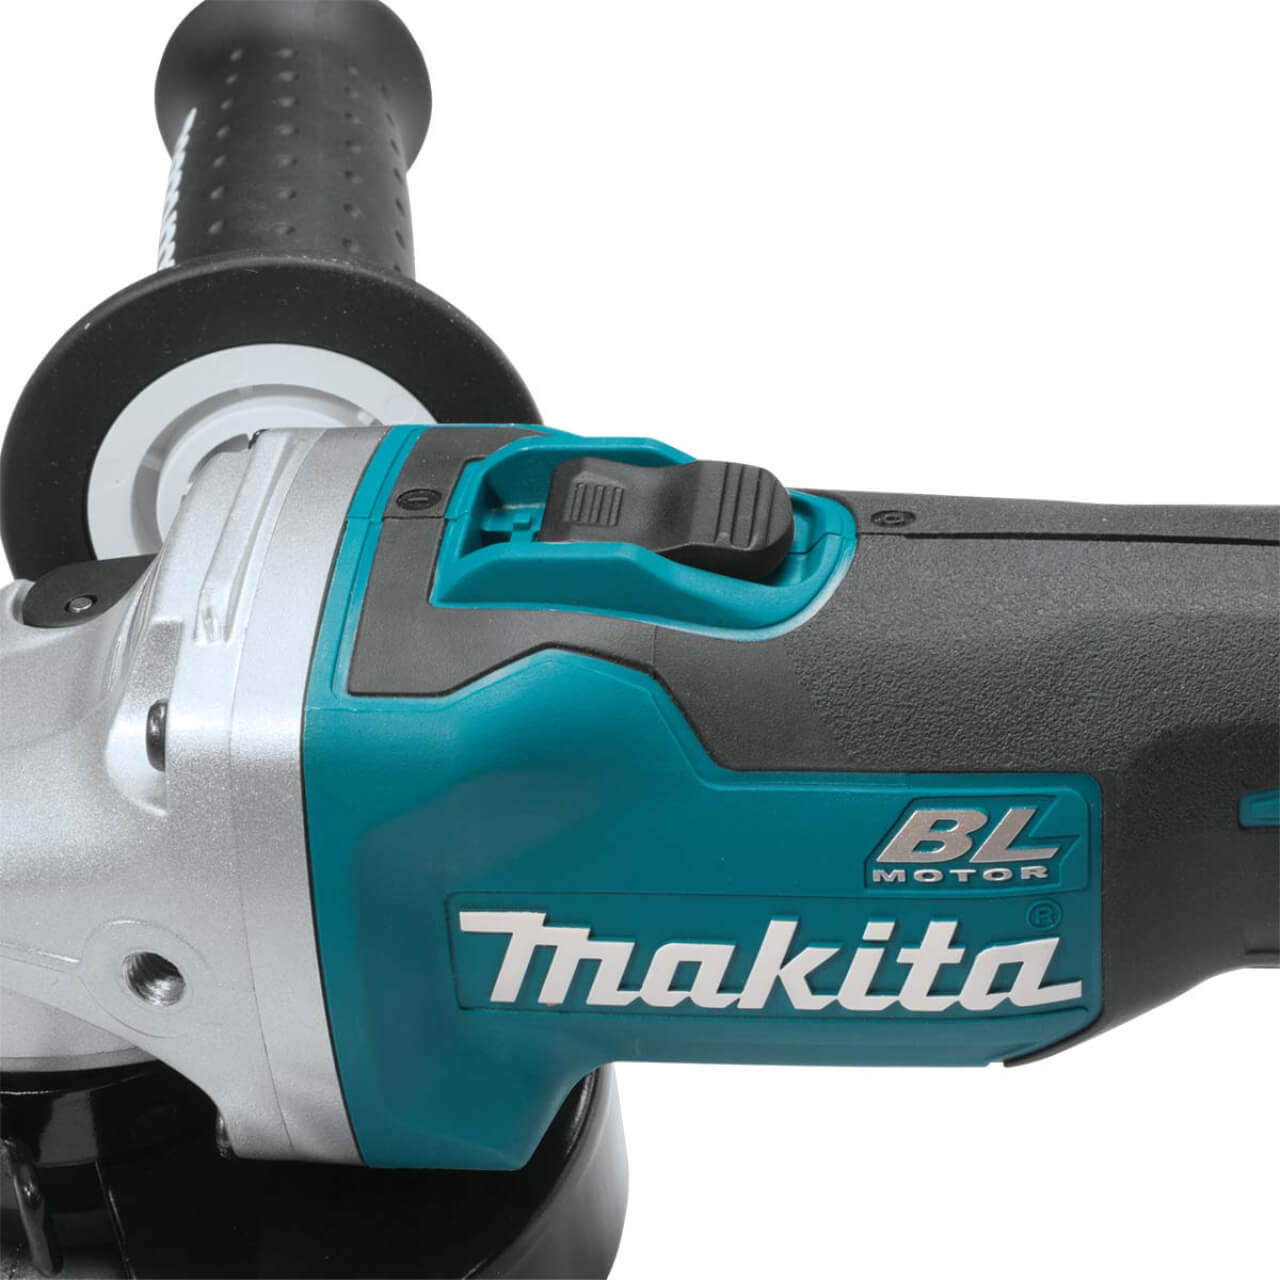 Makita 18V BRUSHLESS 125mm Angle Grinder. Slide Switch. Kick Back Detection. Electric Brake - Tool Only